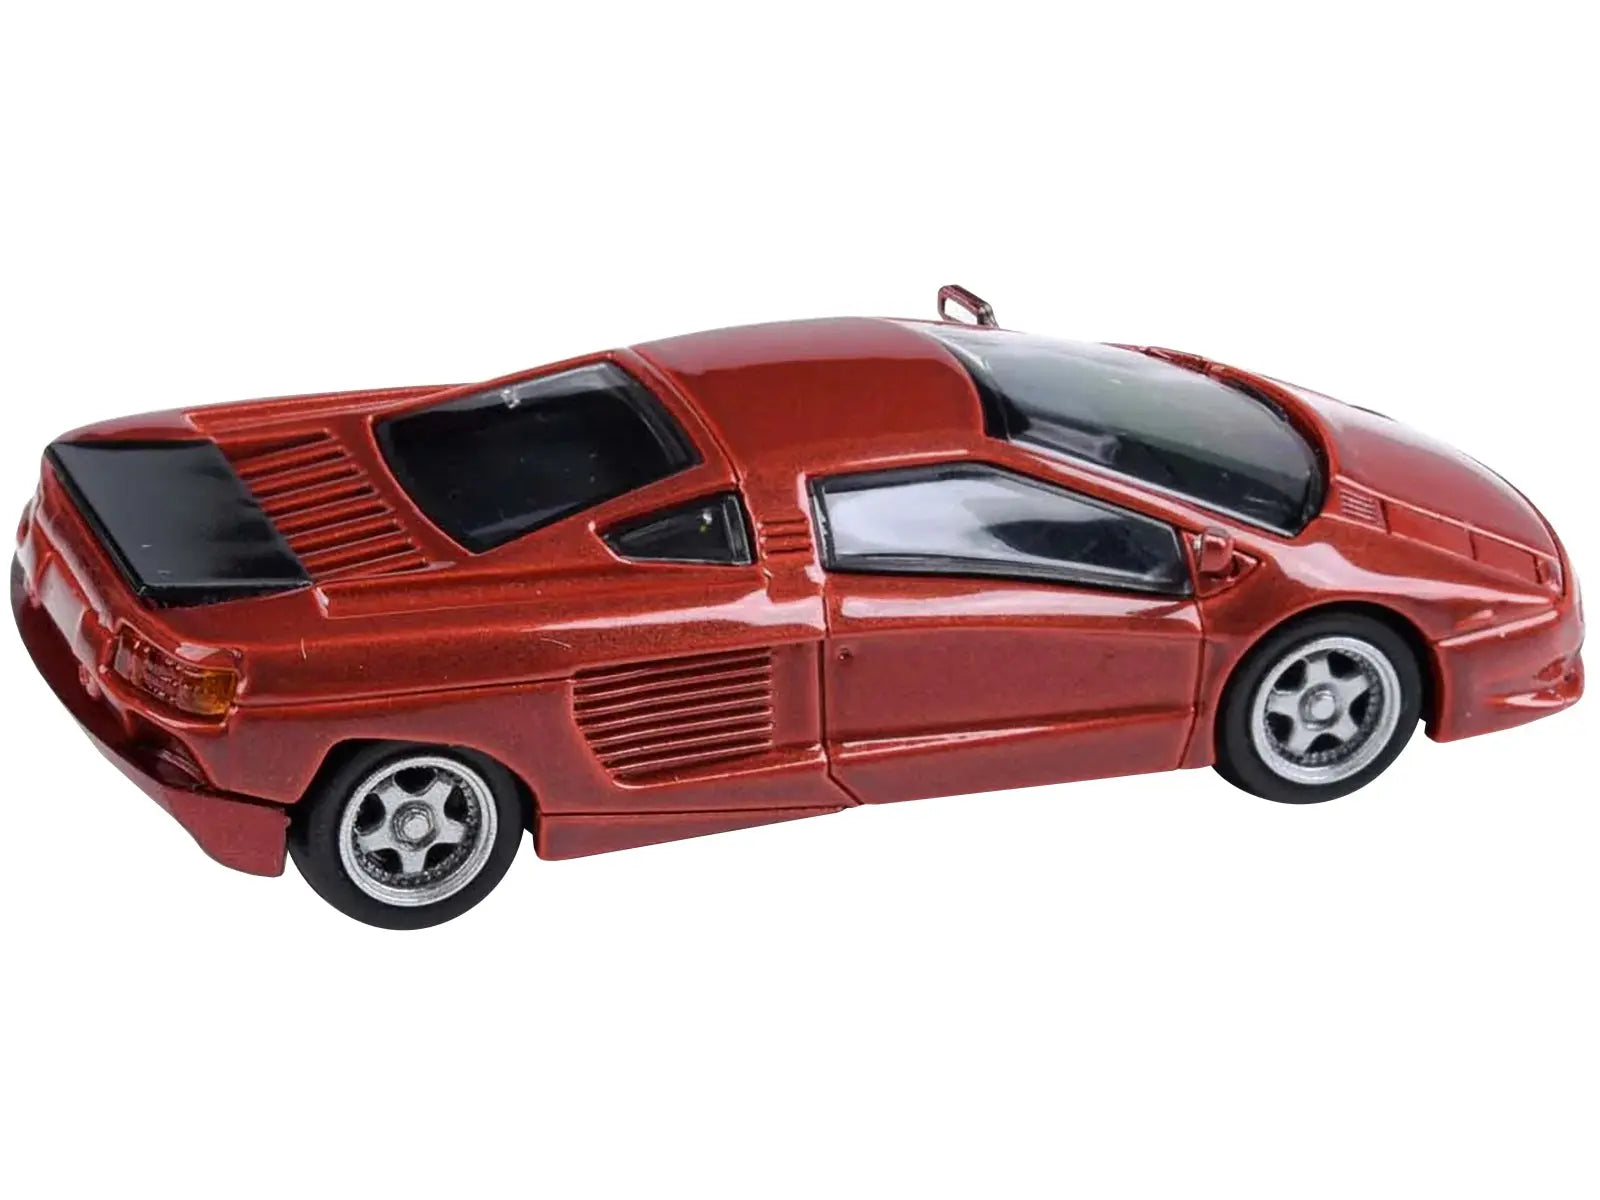 1991 Cizeta V16T Rosso Diablo Red Metallic 1/64 Diecast Model Car by Paragon Models Paragon